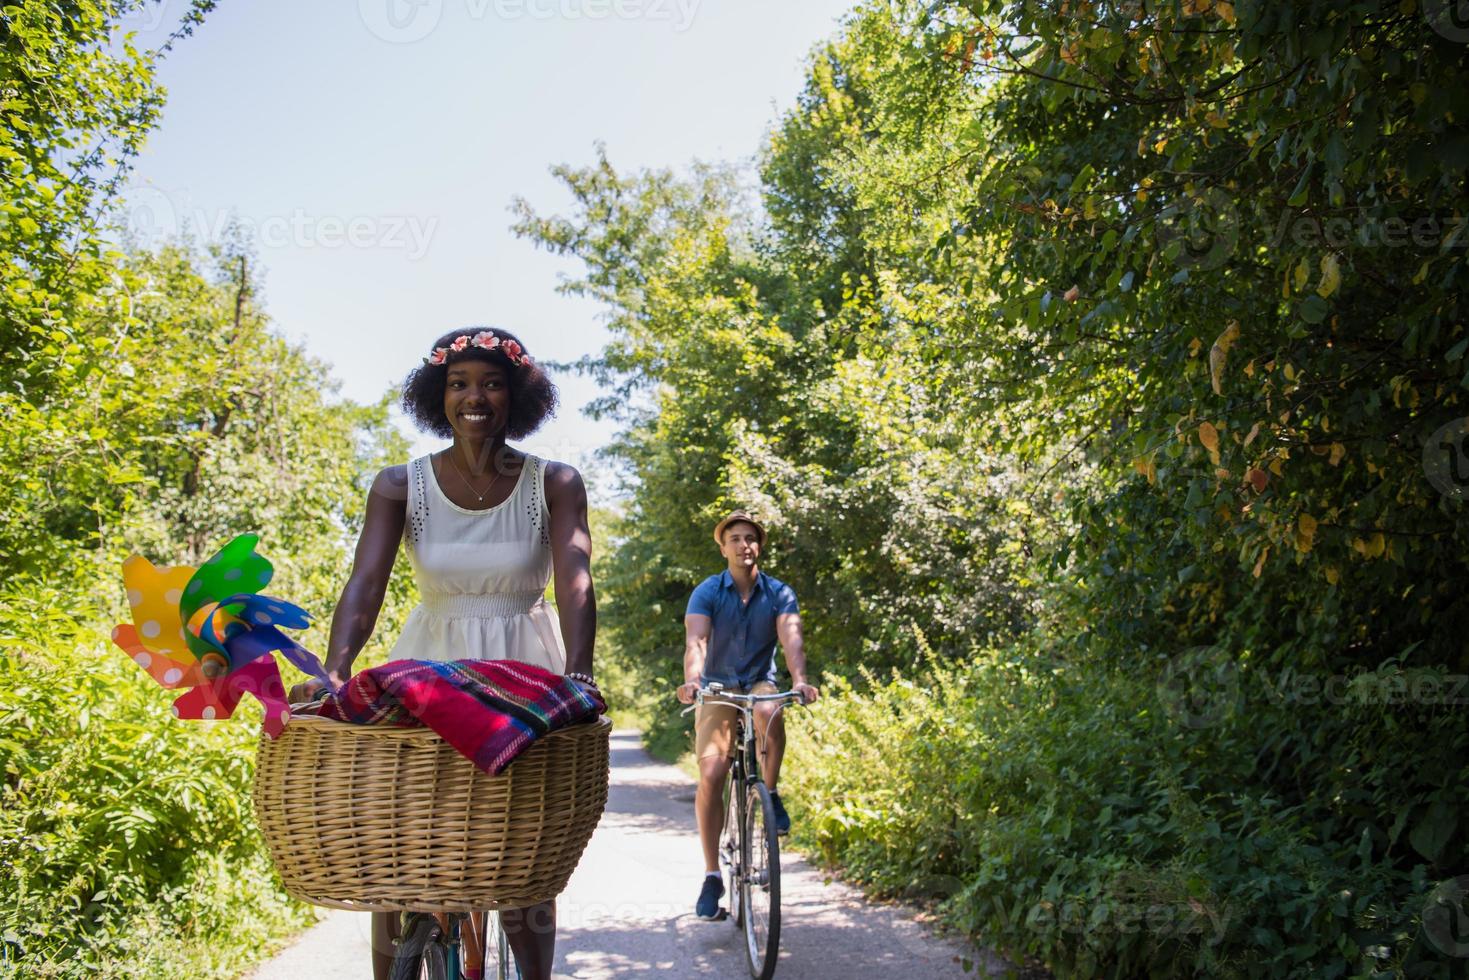 unga multietniska par som har en cykeltur i naturen foto